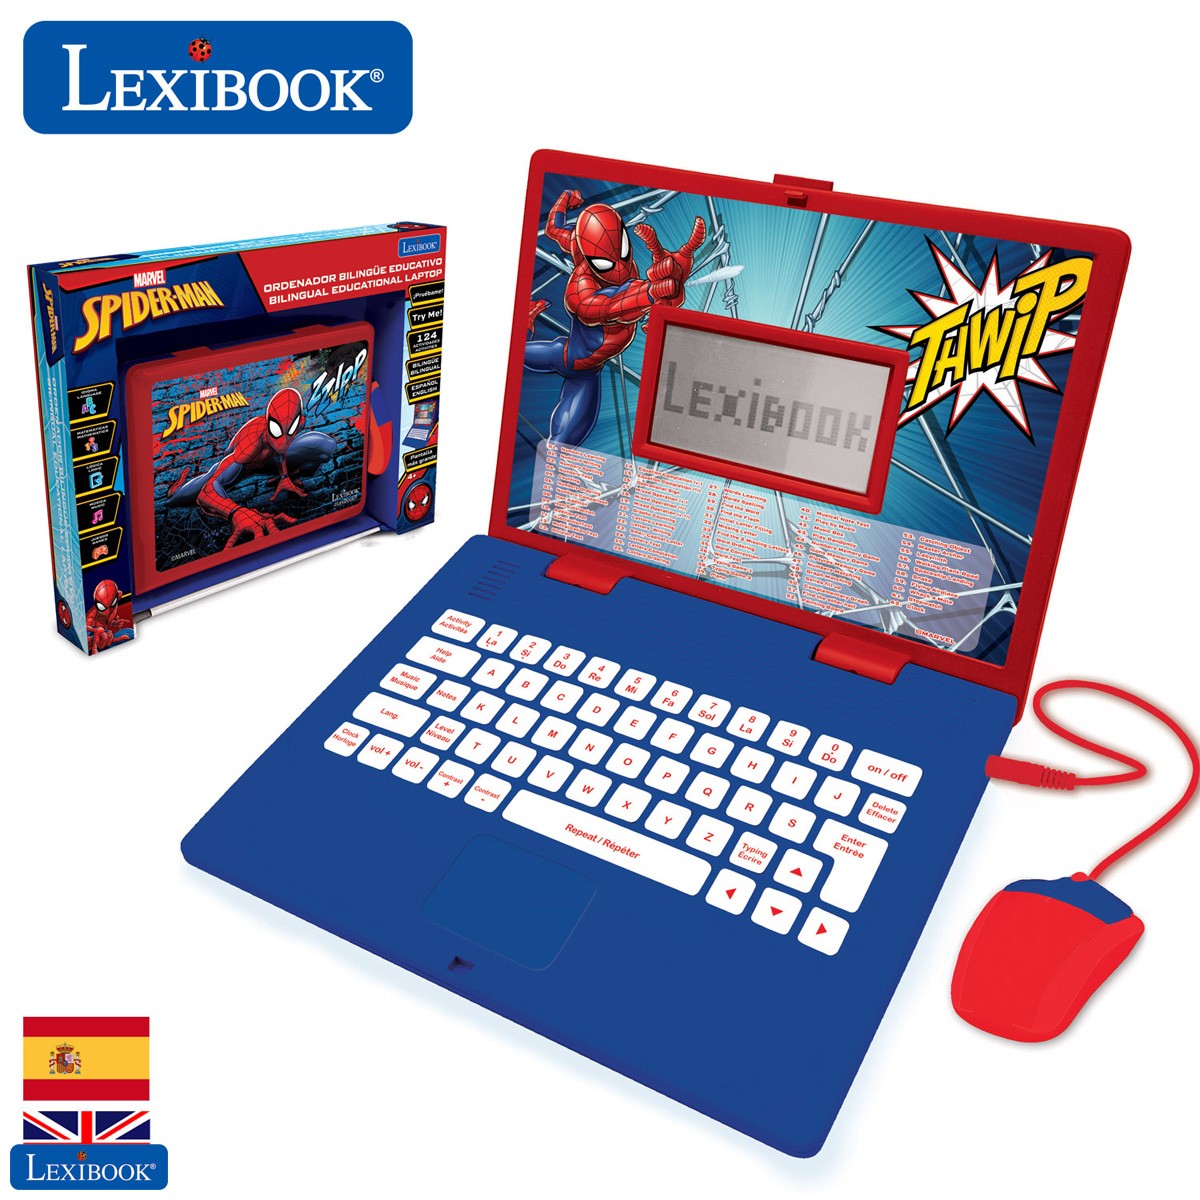 Spider-Man - Educational and Bilingual Laptop Spanish/English 